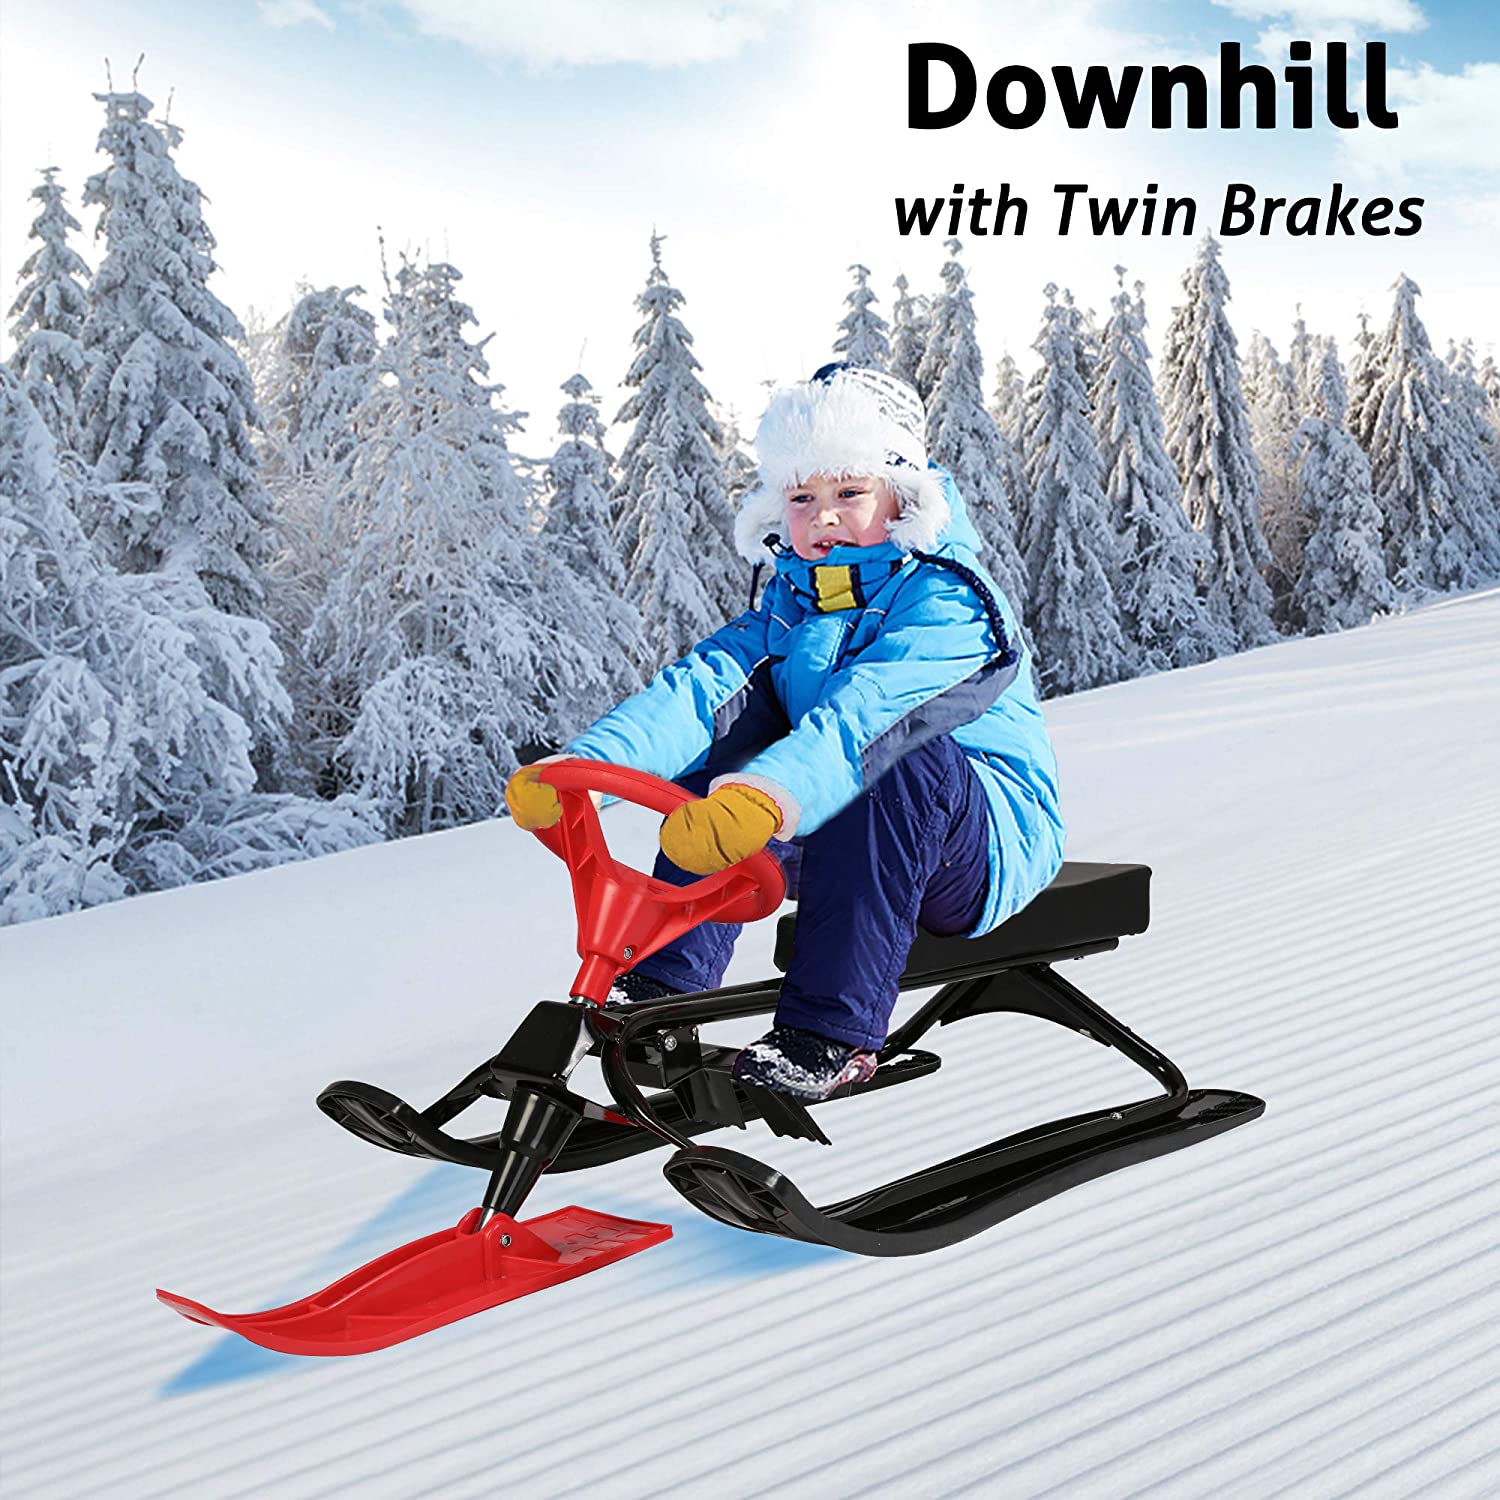 Snow Racer Sled with Steering Wheel and Brakes Kids Teens Ski Sled Slider Board, Red